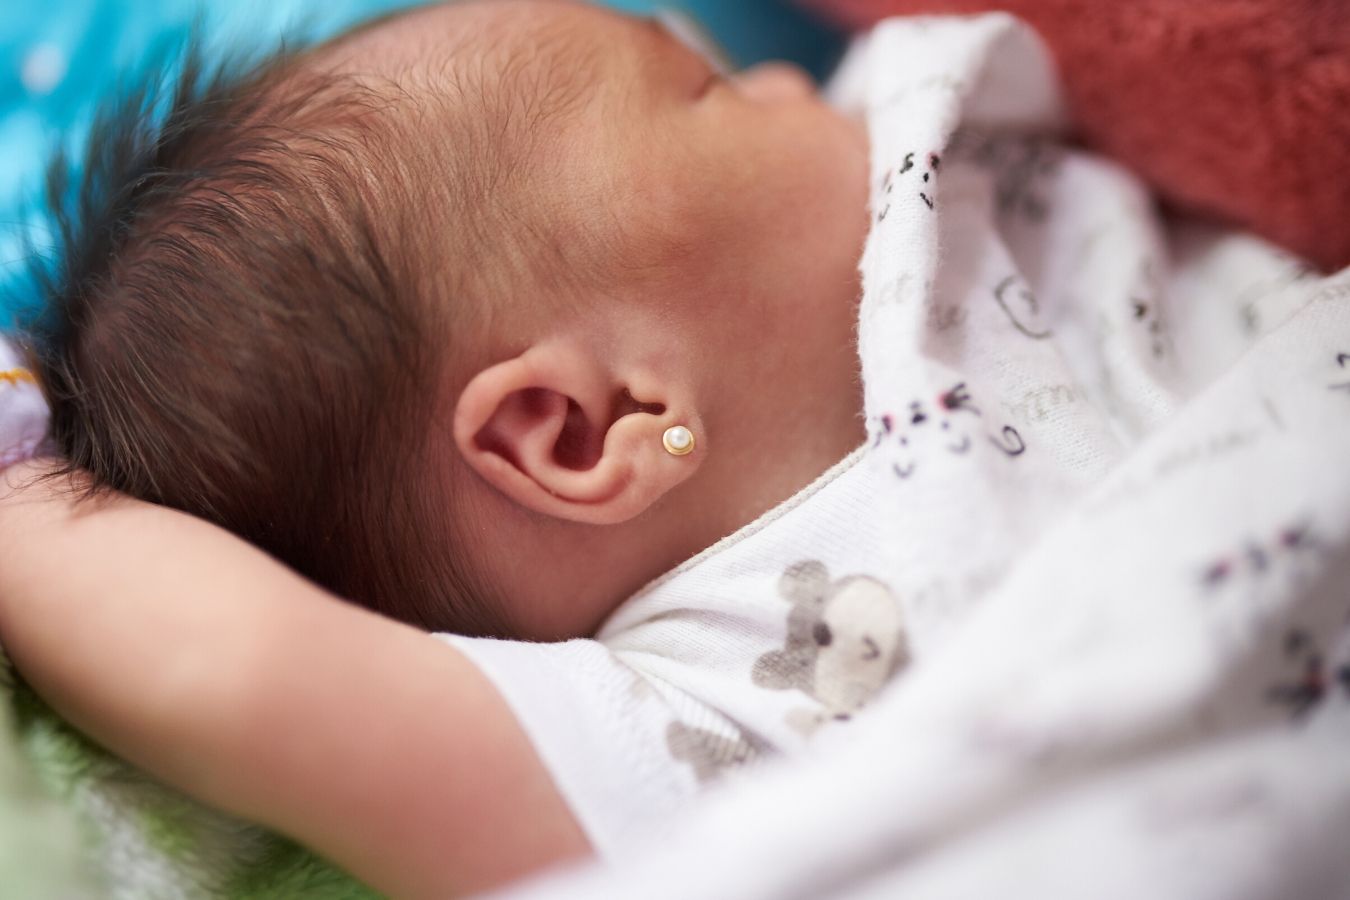 Baby Ear Piercing Near Me - Find Baby Ear Piercing Places on